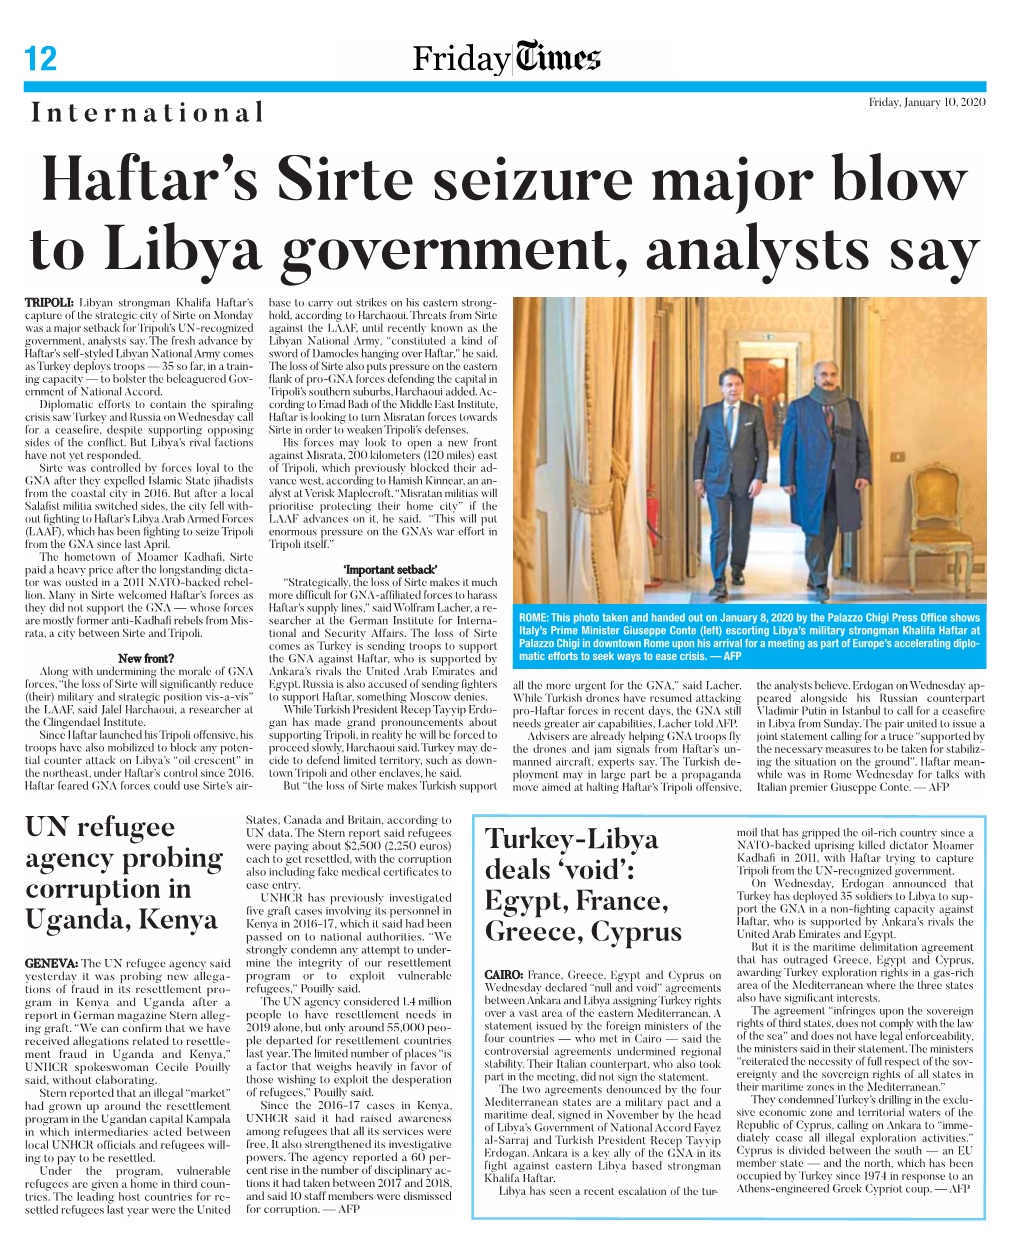 Haftar's Sirte Seizure Major Blow to Libya Government, Analysts